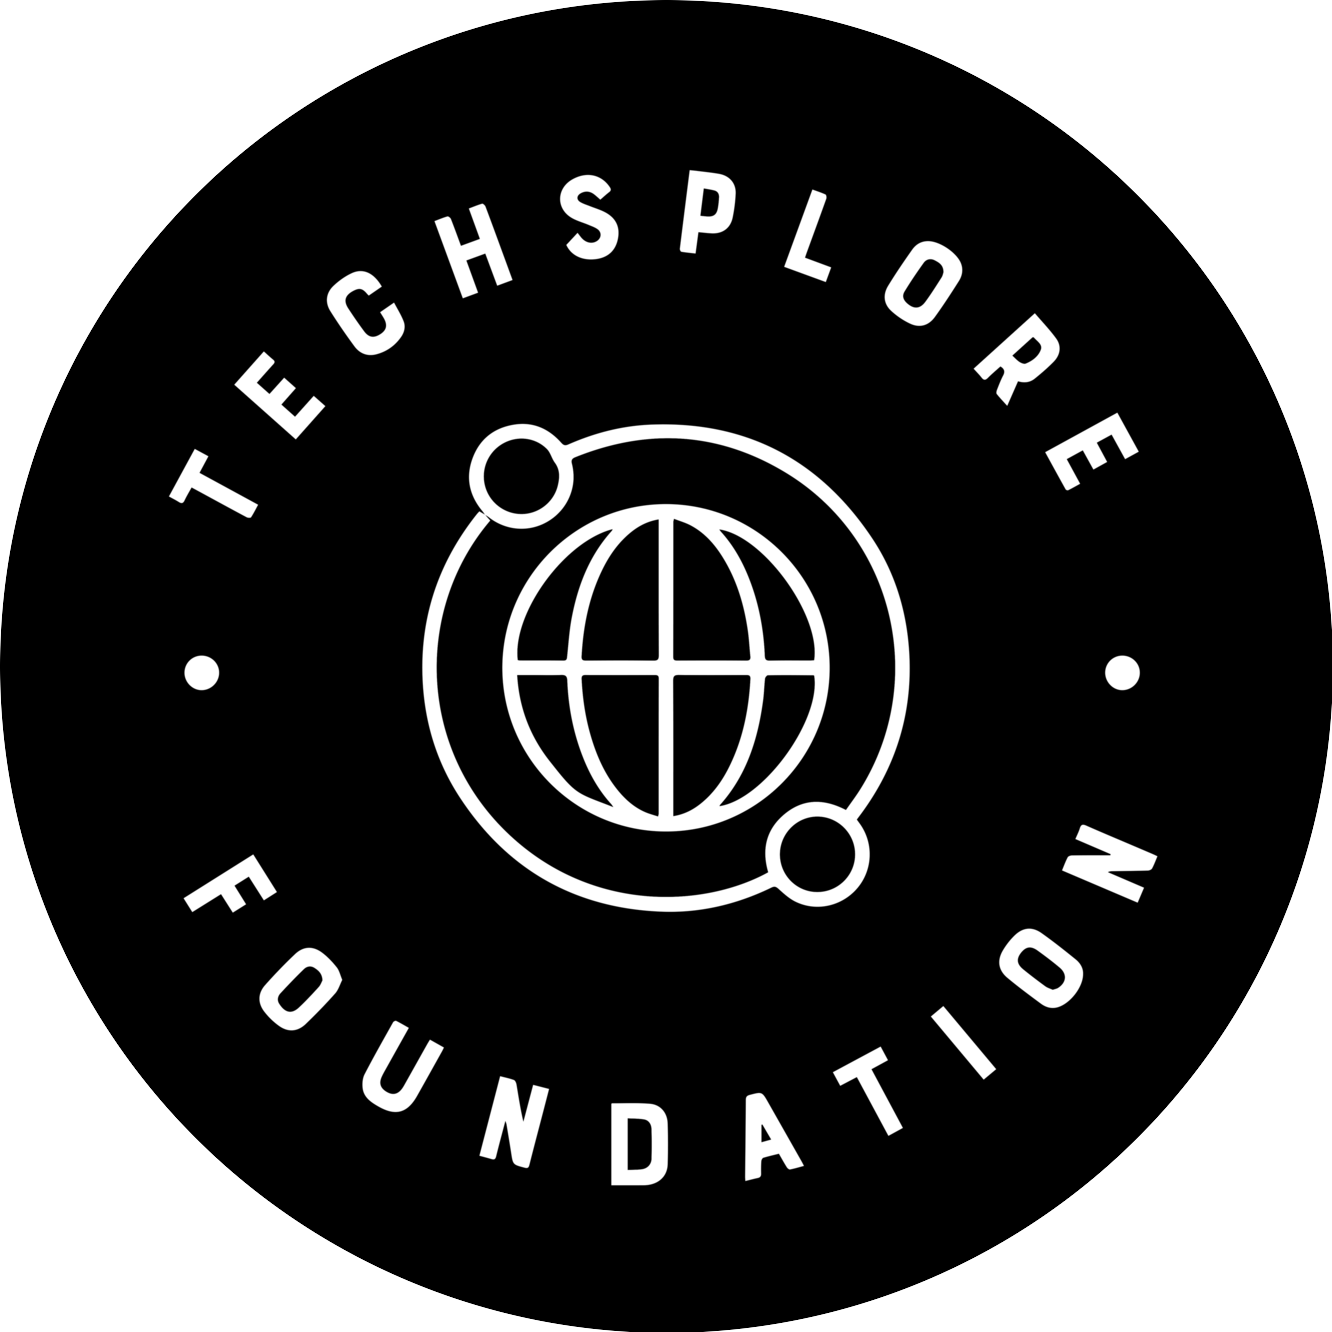 Techsplore Foundation